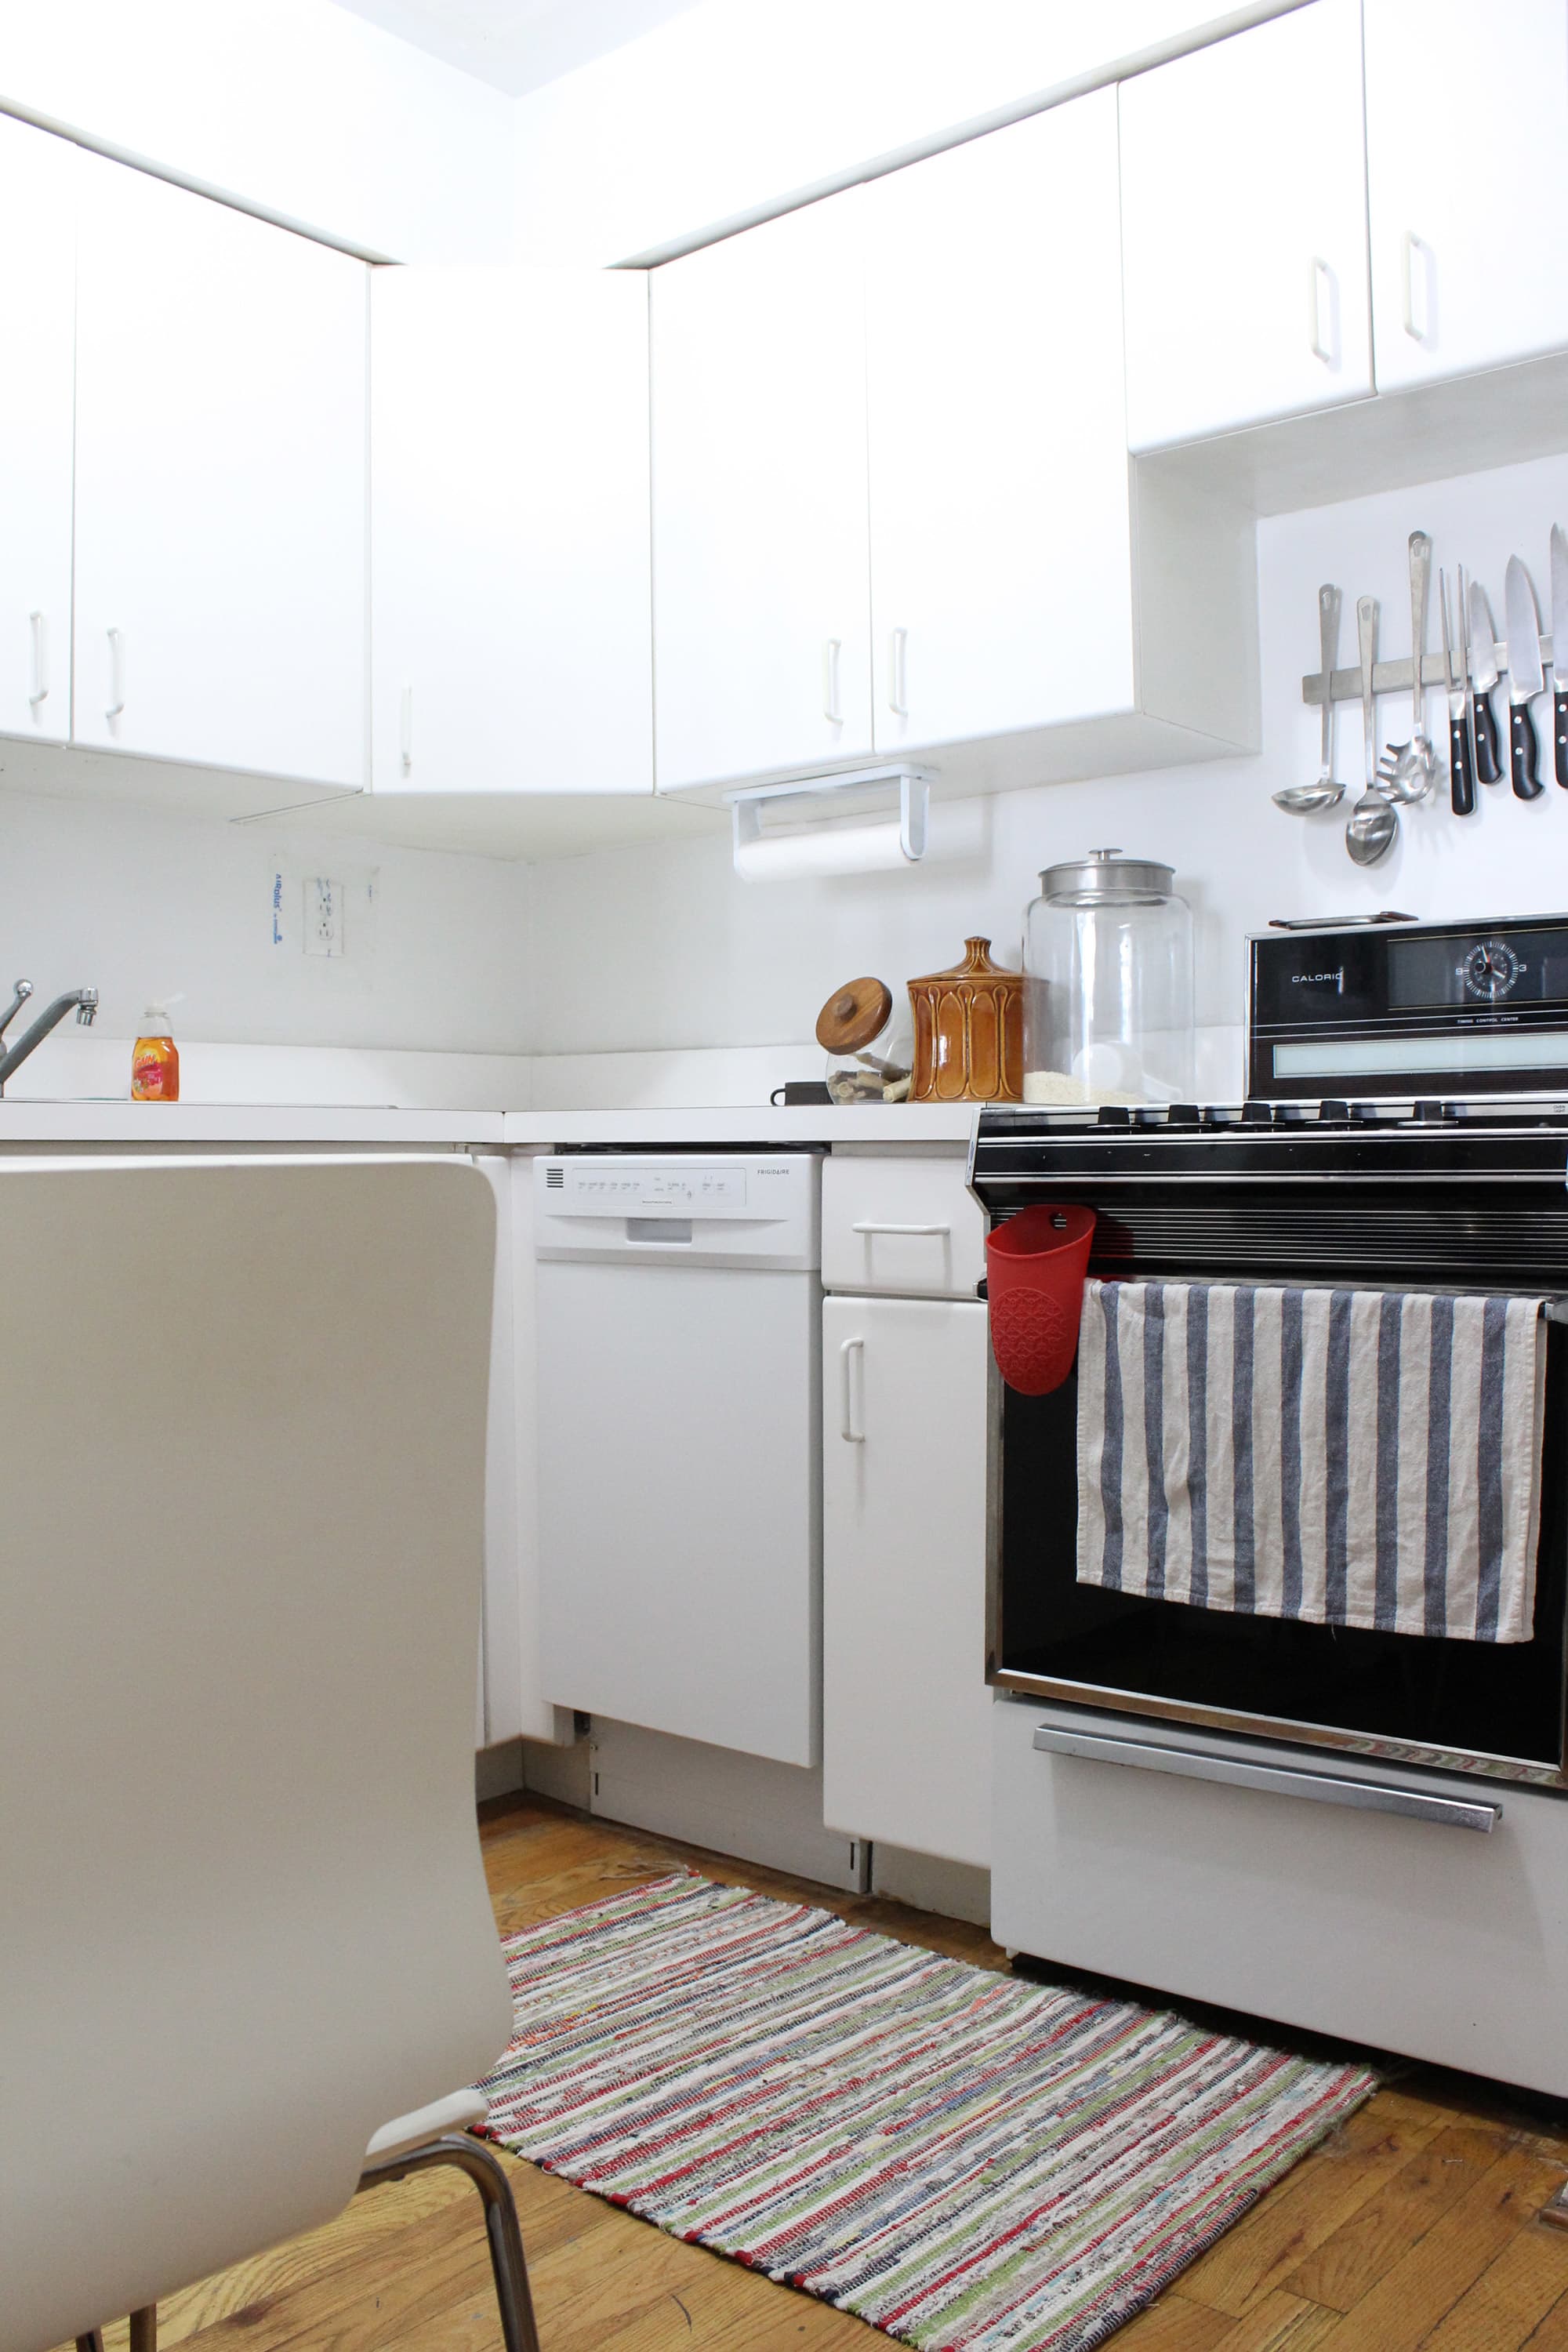 32 Brilliant Hacks to Make A Small Kitchen Look Bigger — Eatwell101